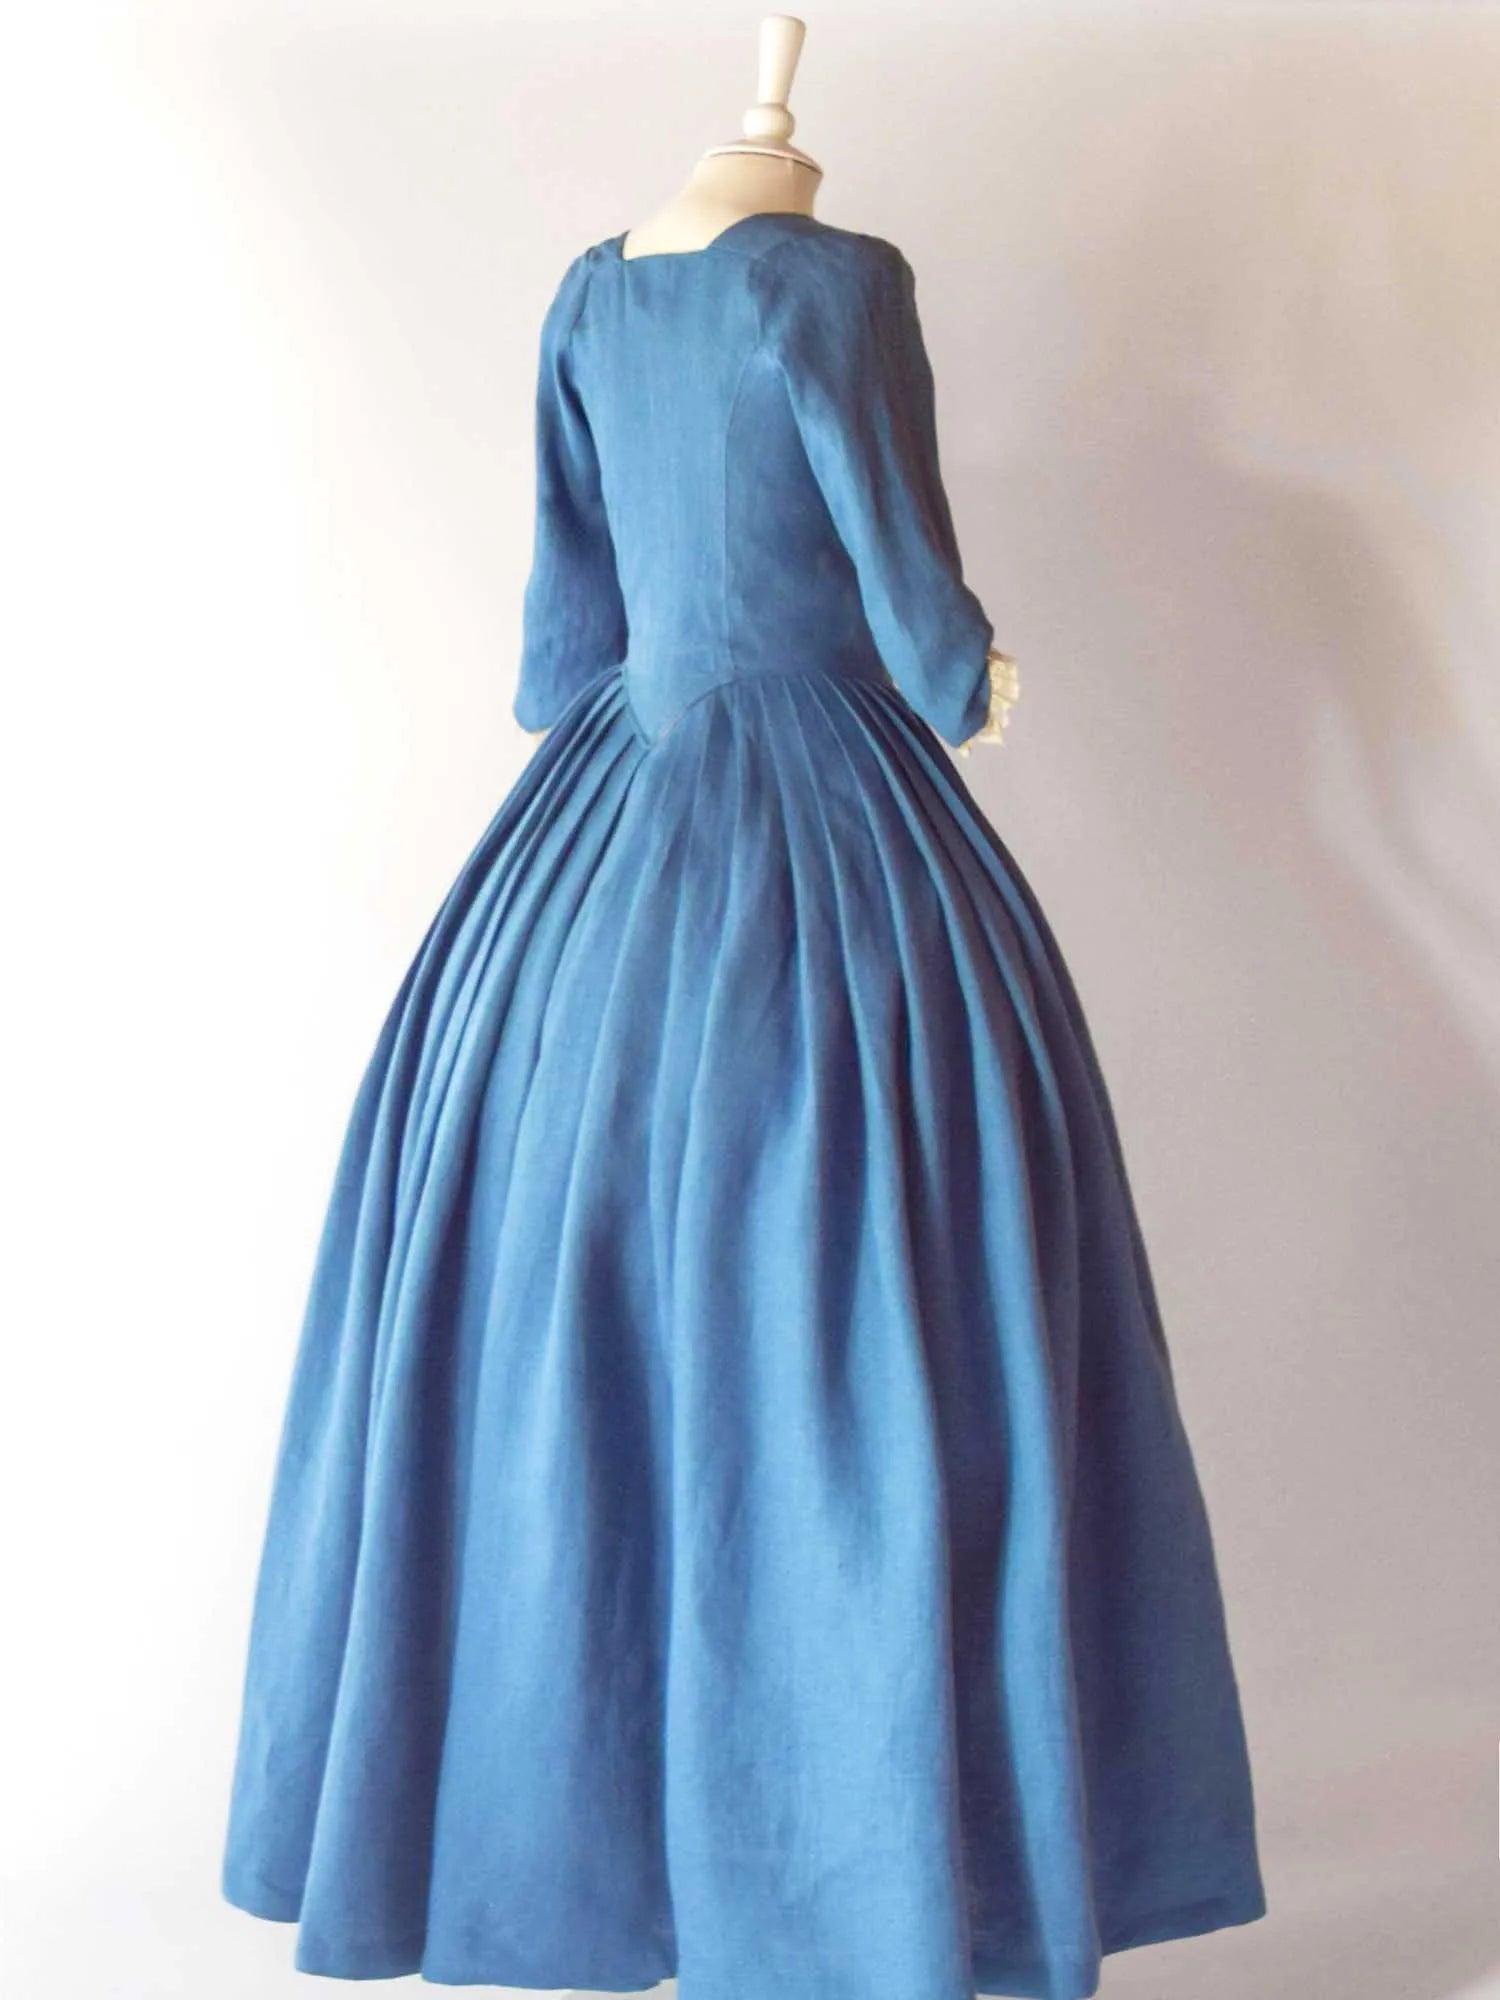 18th Century Overdress in Steel Blue Linen - Atelier Serraspina